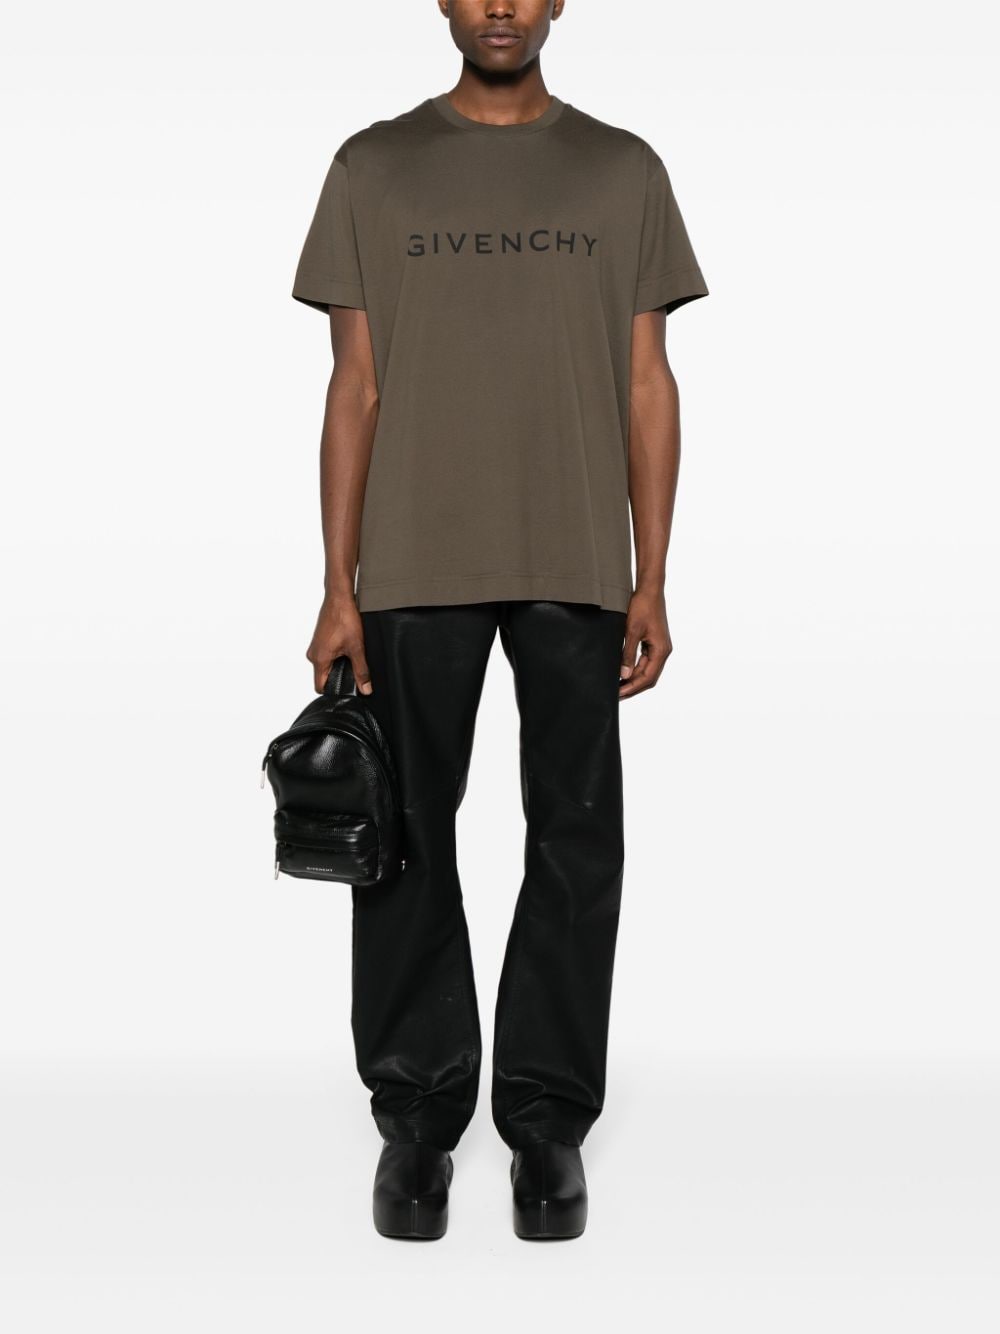 Givenchy T-shirt met logoprint - Groen